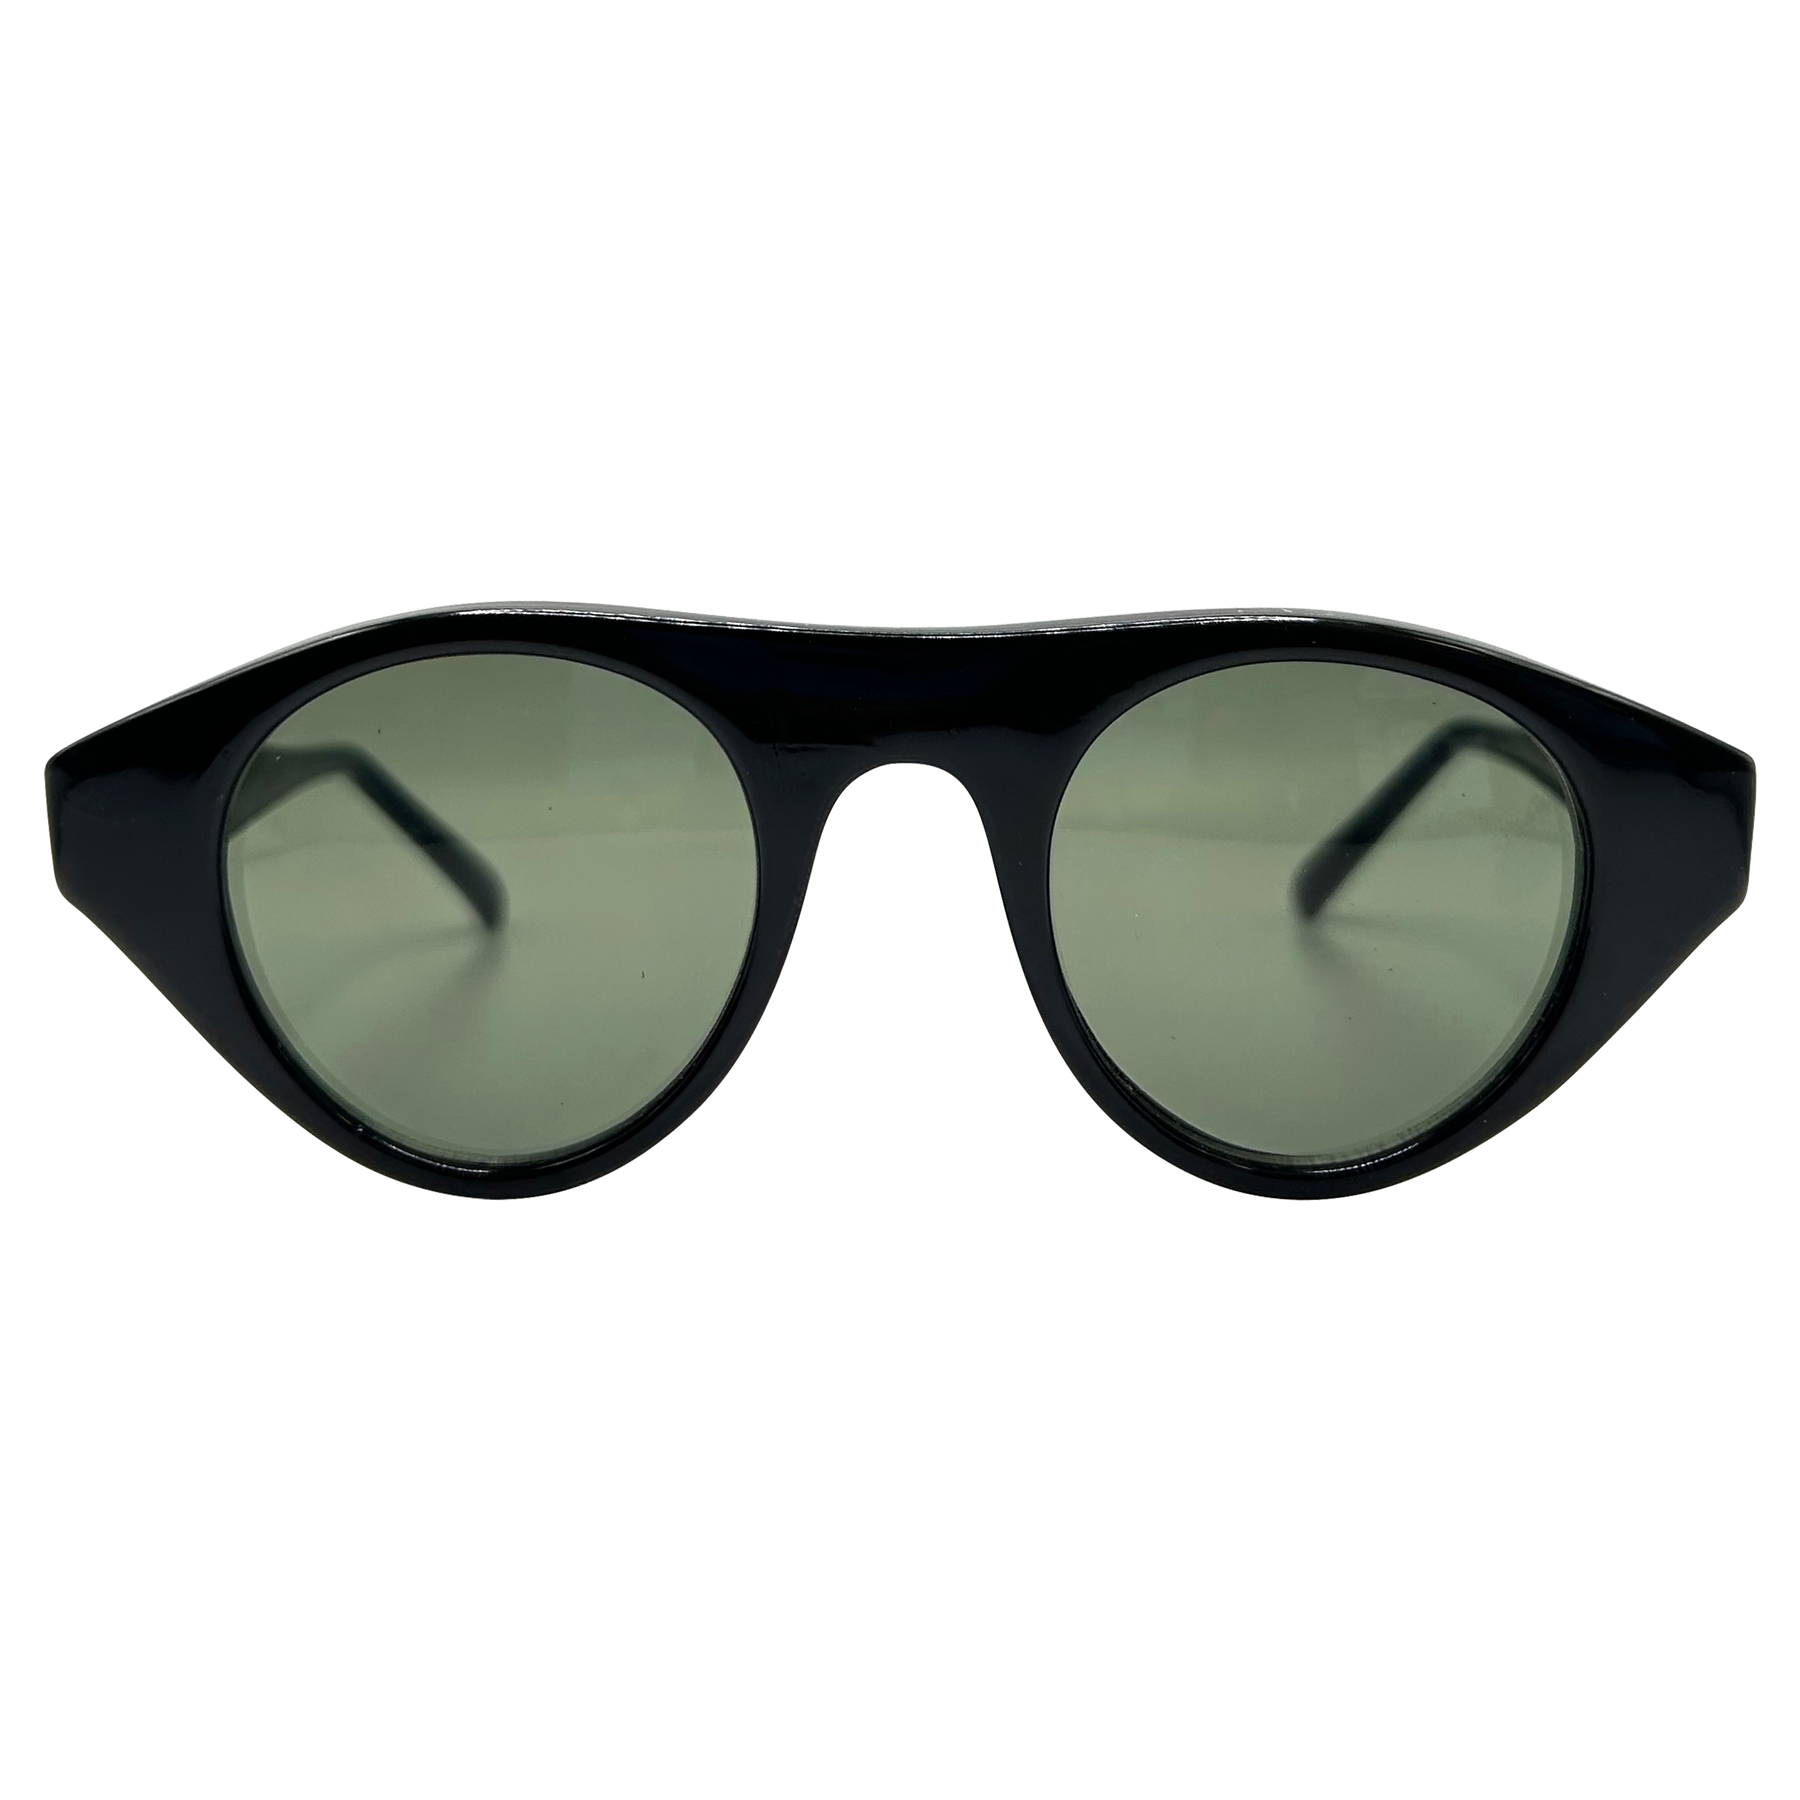 PRISS Black Steampunk Sunglasses